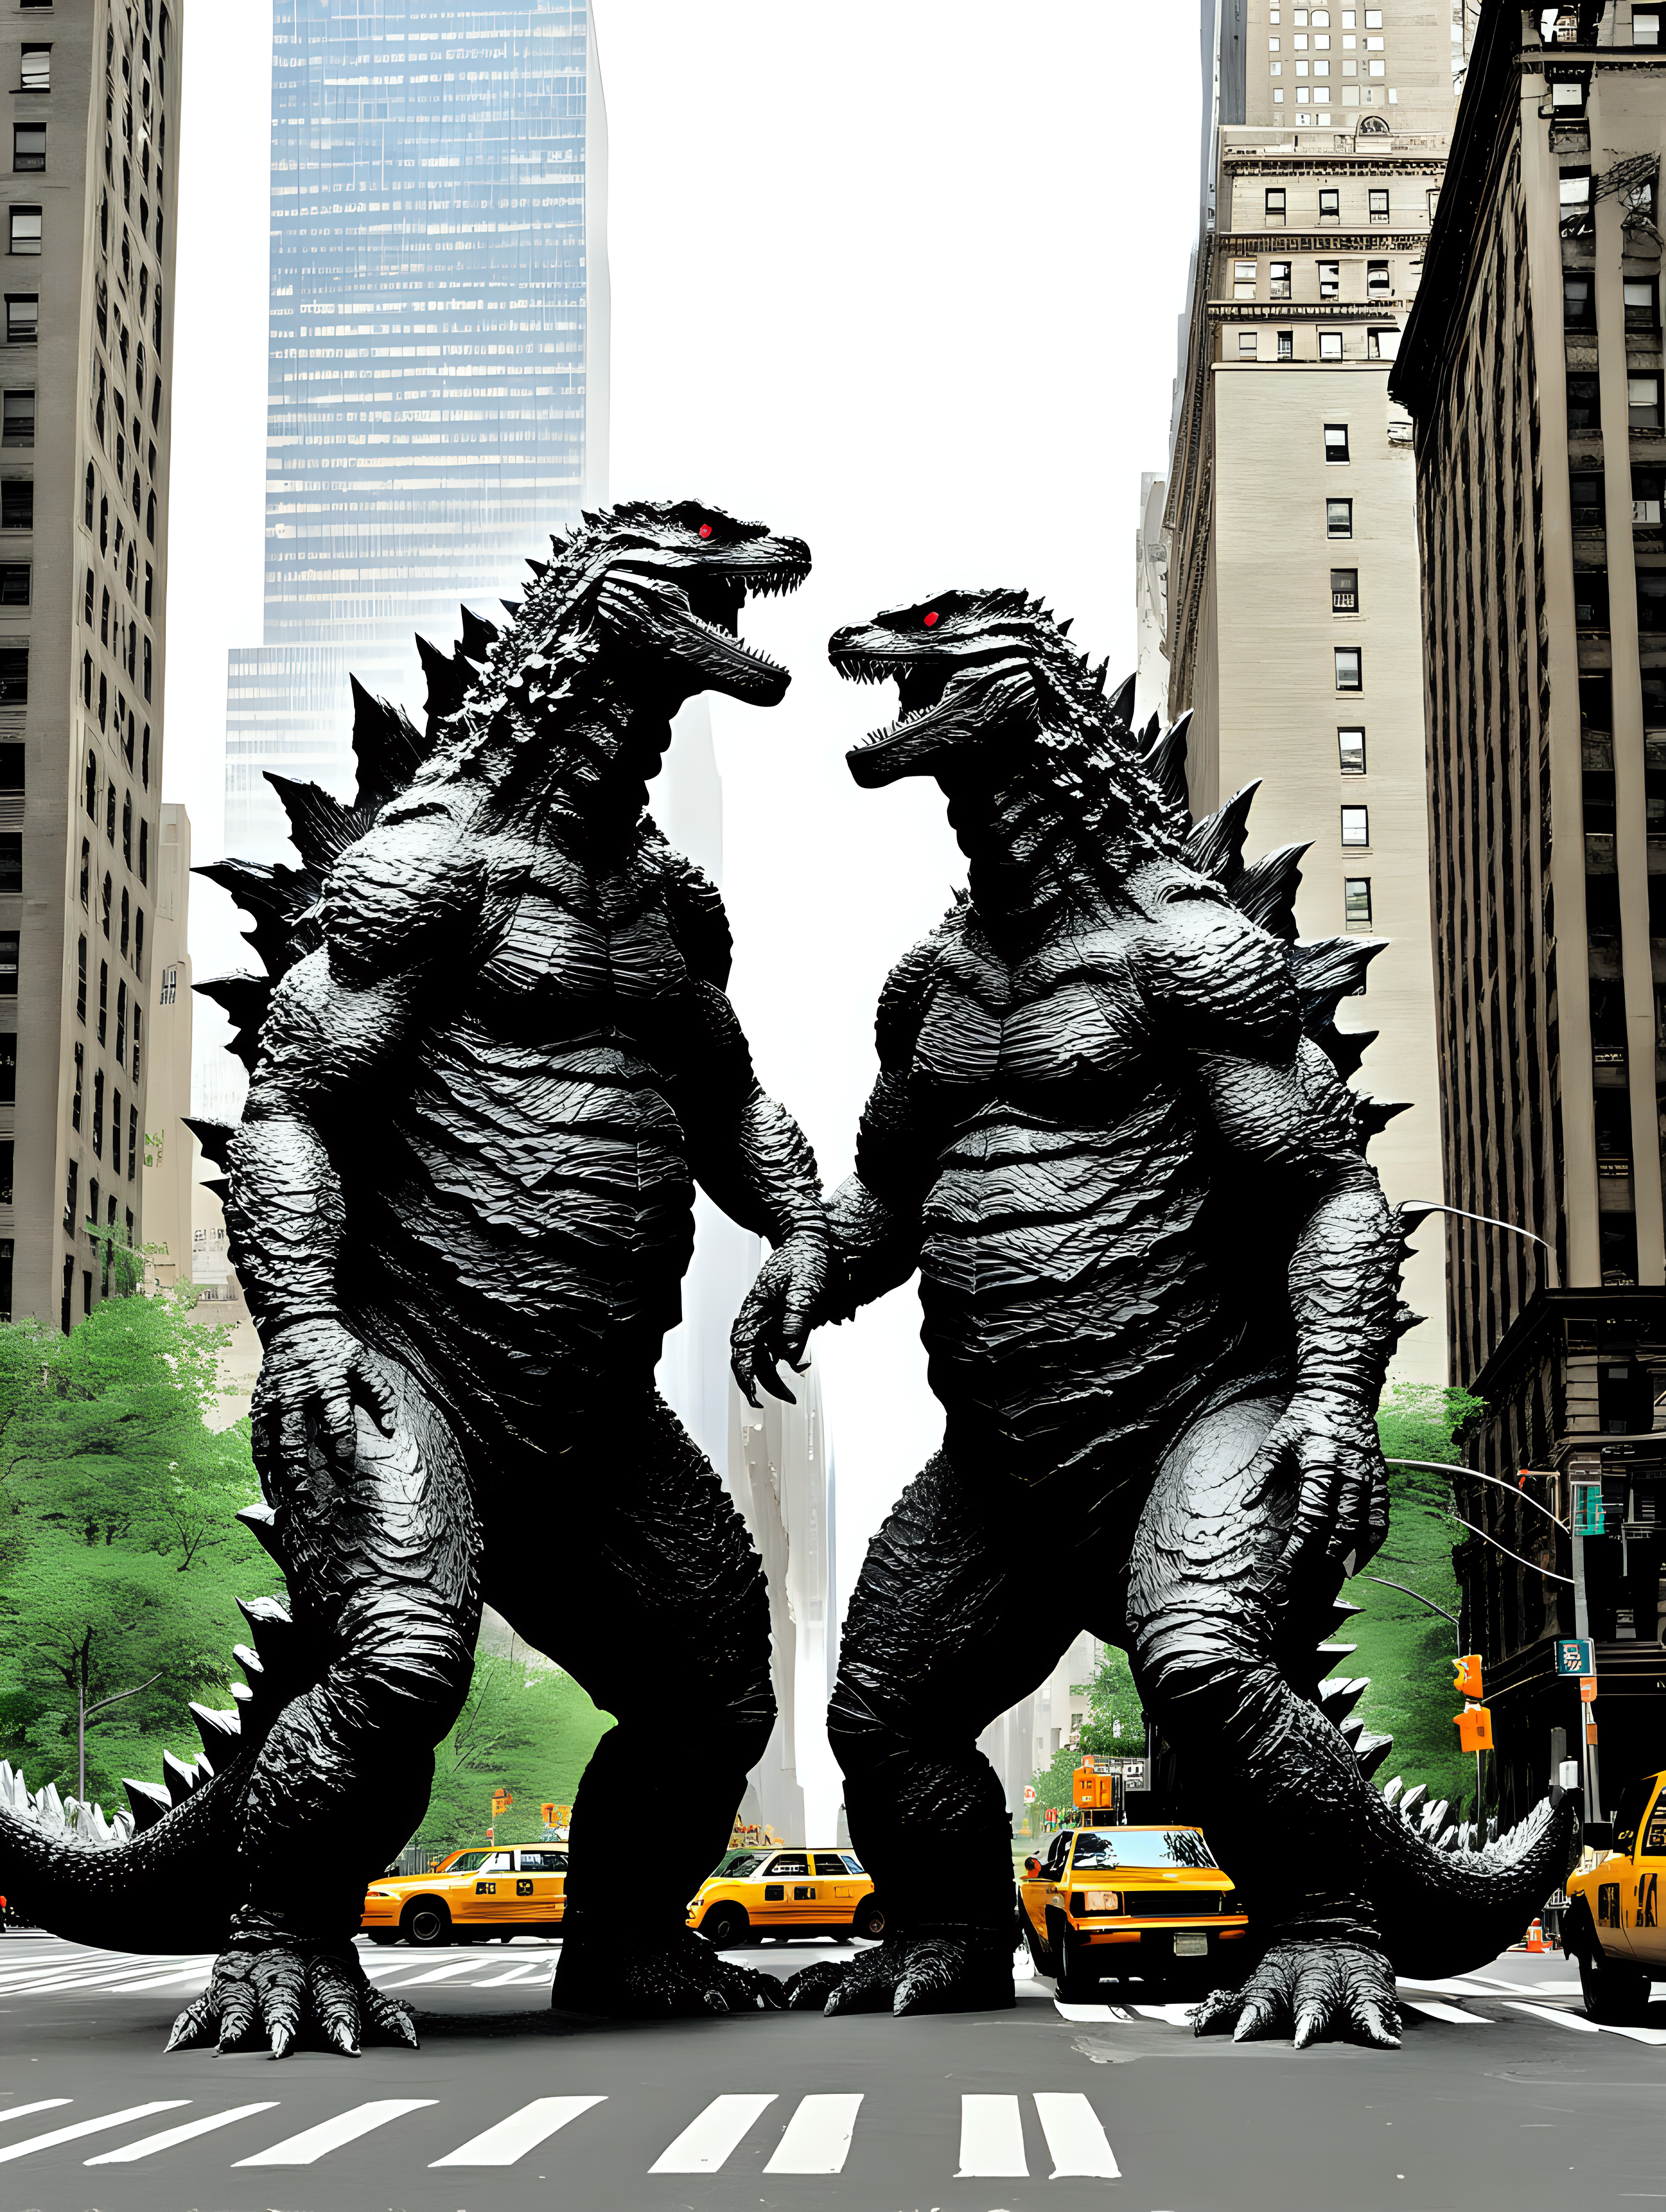 2 heads Godzilla roaming NYC